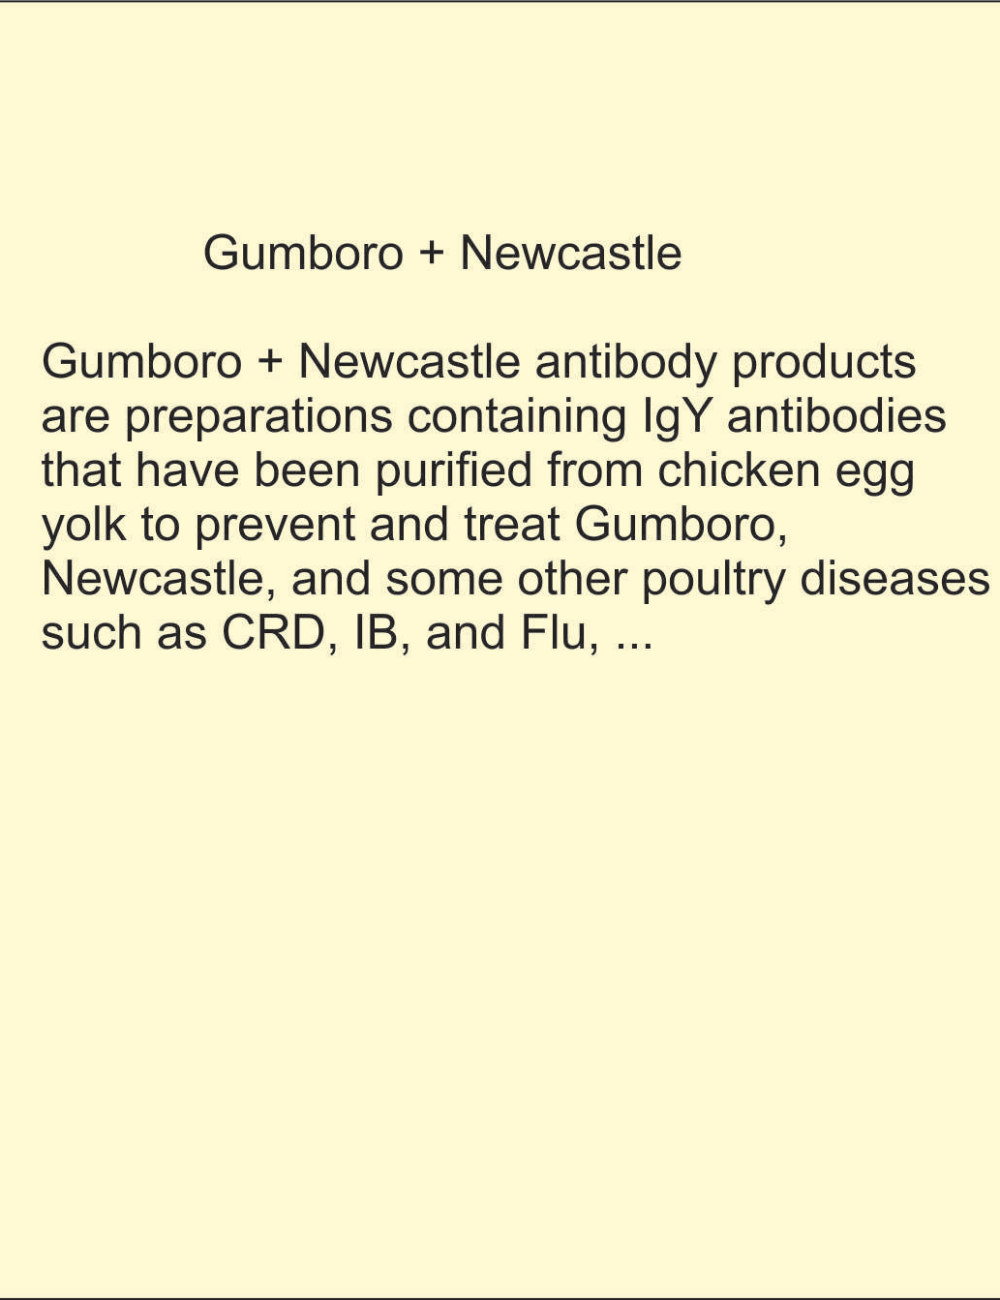 GUMBORO + NEWCASTLE ANTIBODY